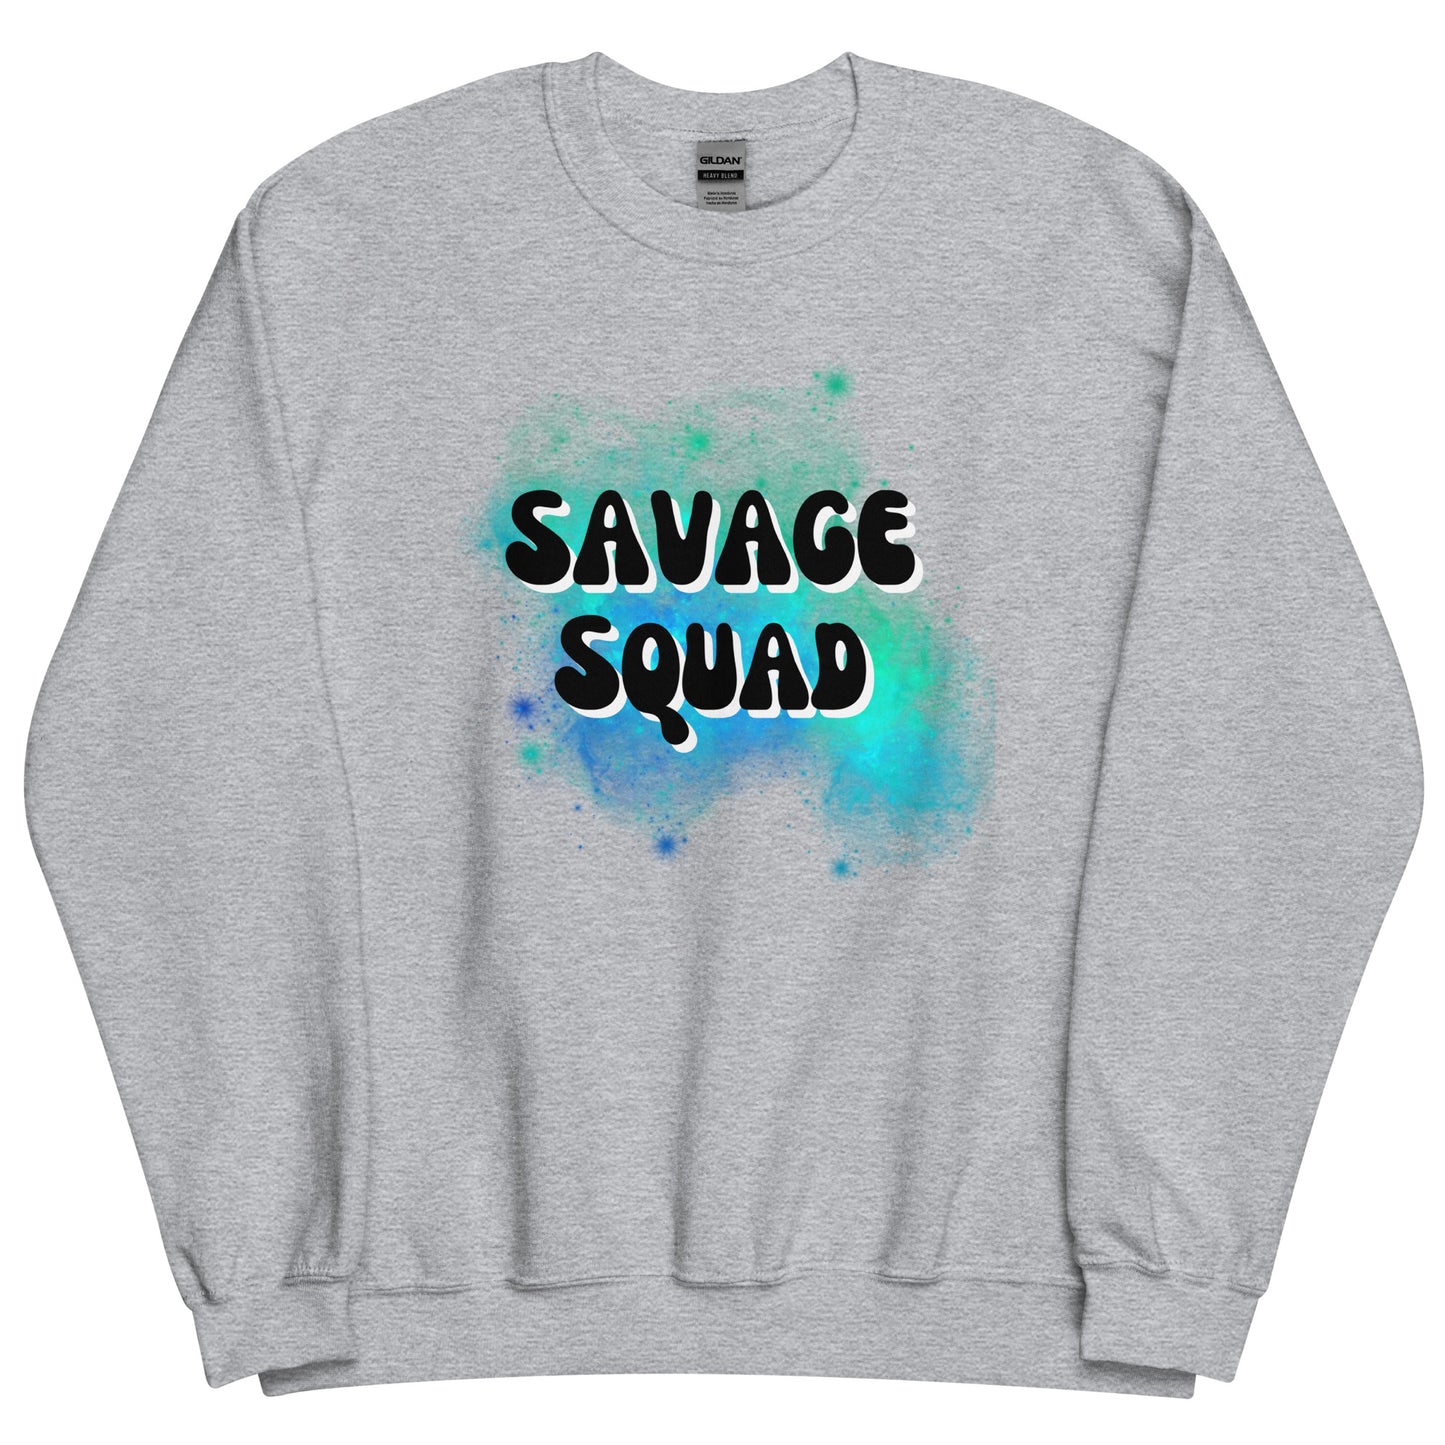 Galaxy Savage Squad Sweatshirt